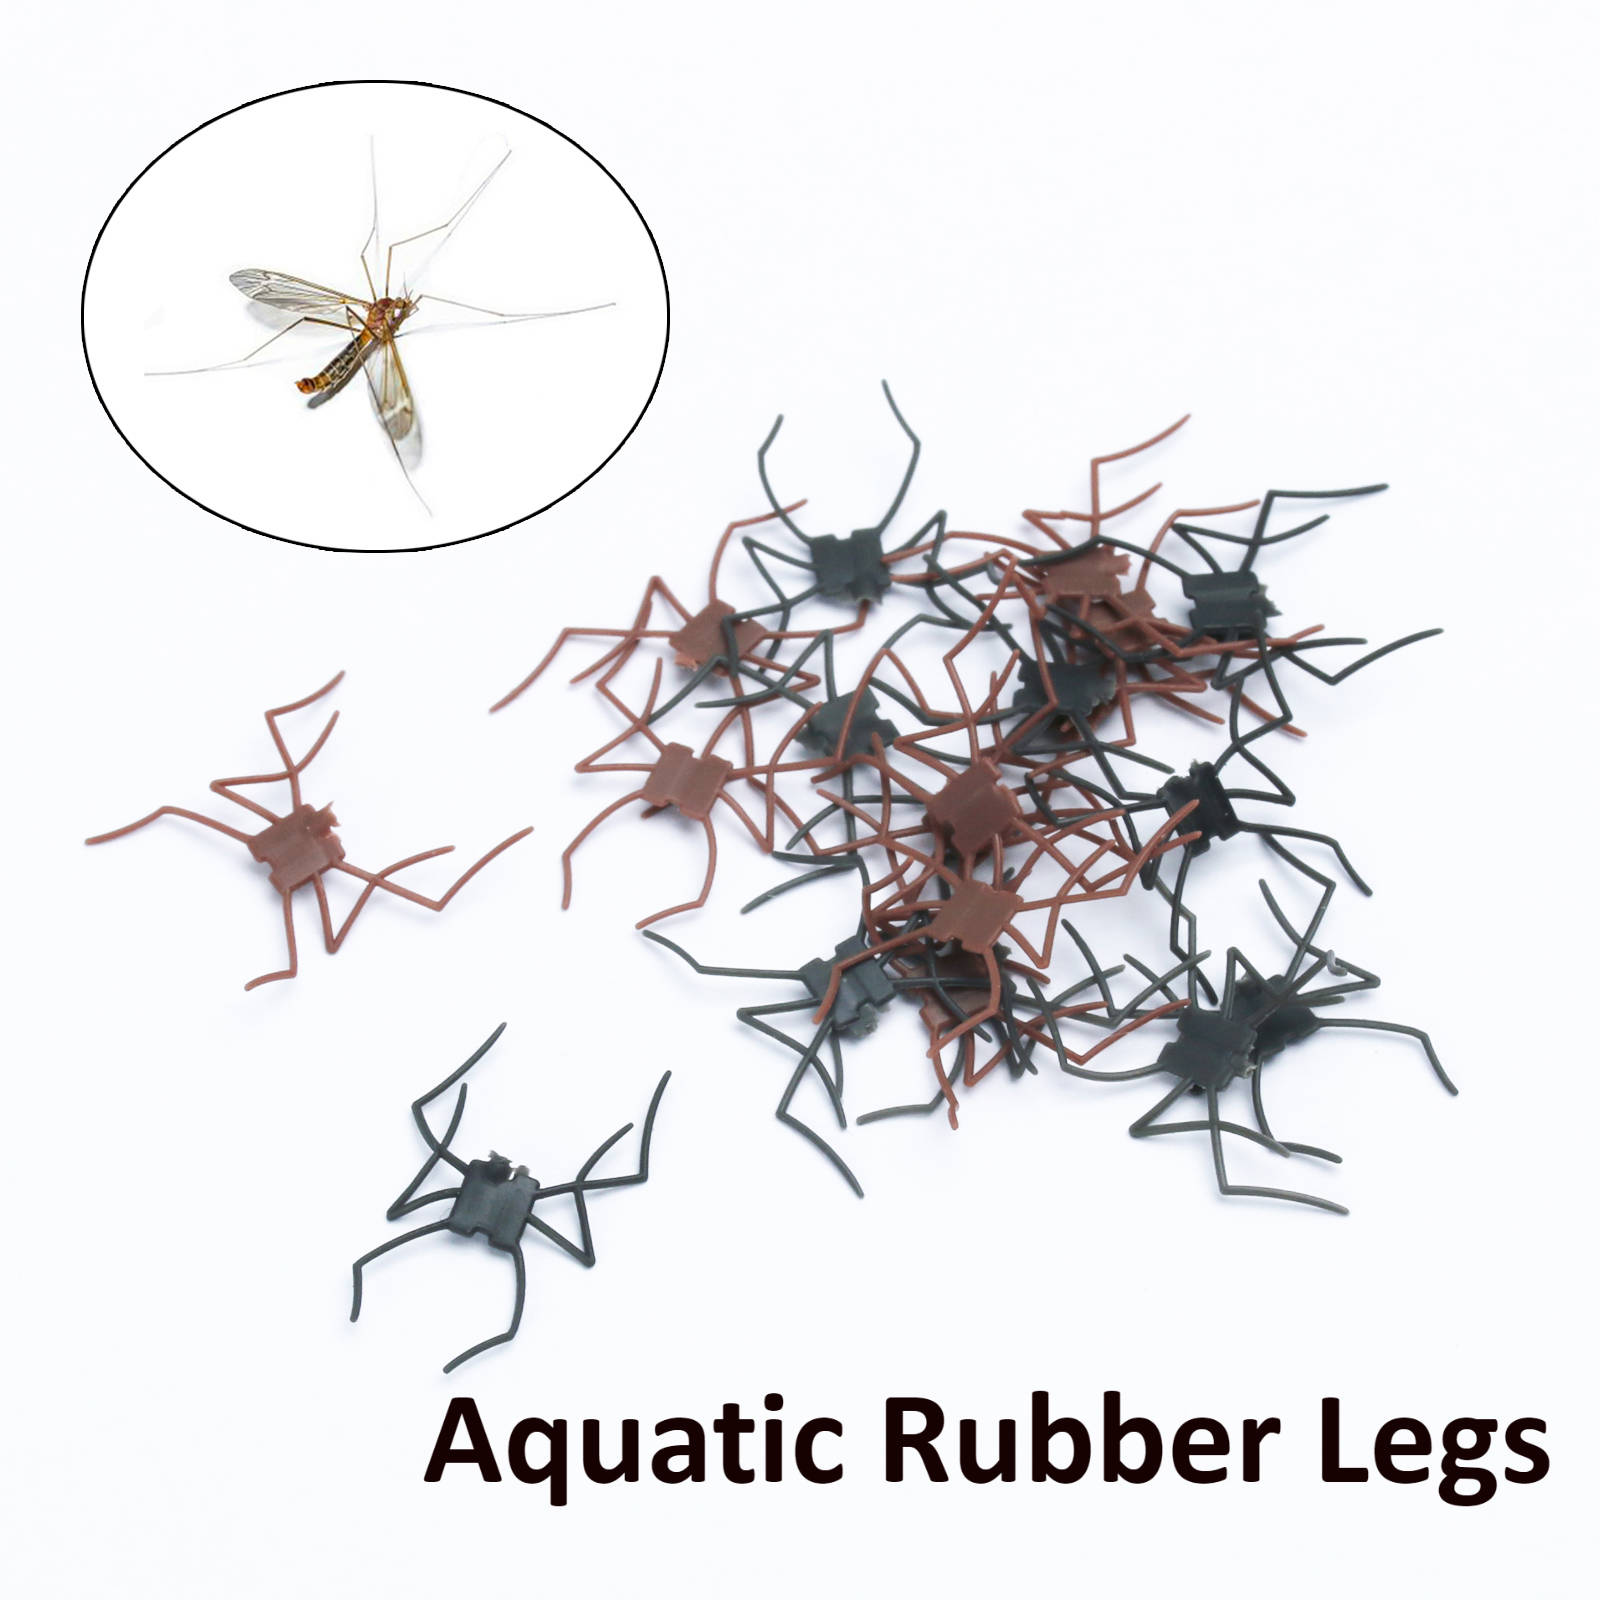 Aquatic Rubber legs